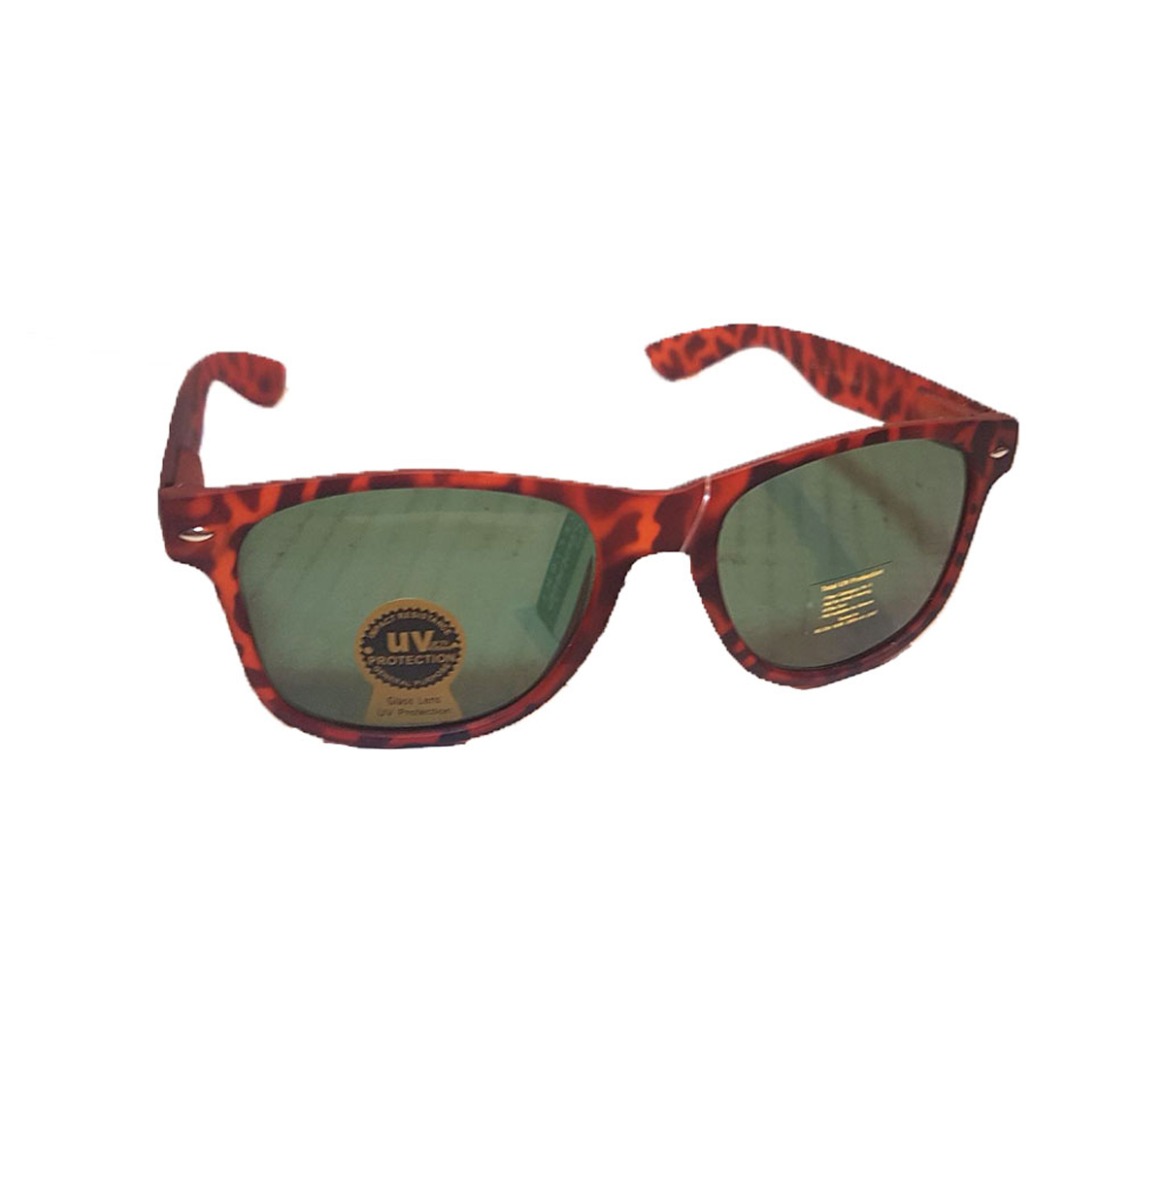 Revive Retro Wayfarer Sunglasses Tortoise Shell